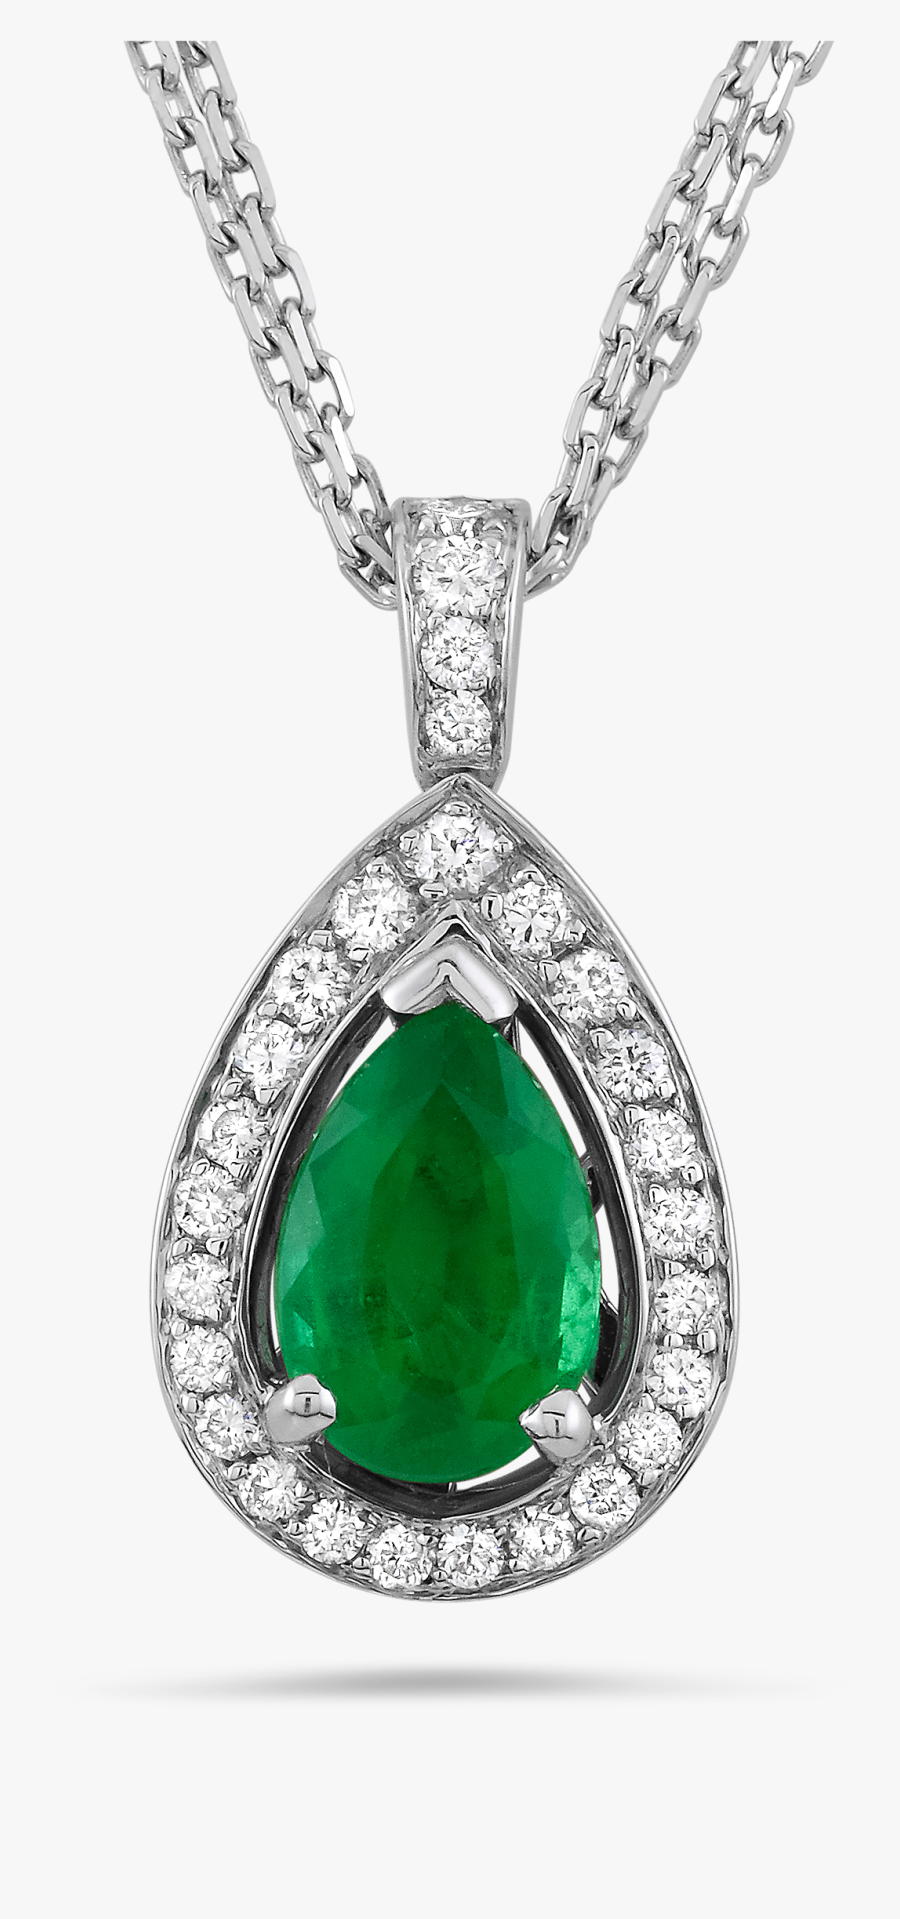 Necklace Clipart Emerald - Emerald Necklace Png Clipart, Transparent Clipart